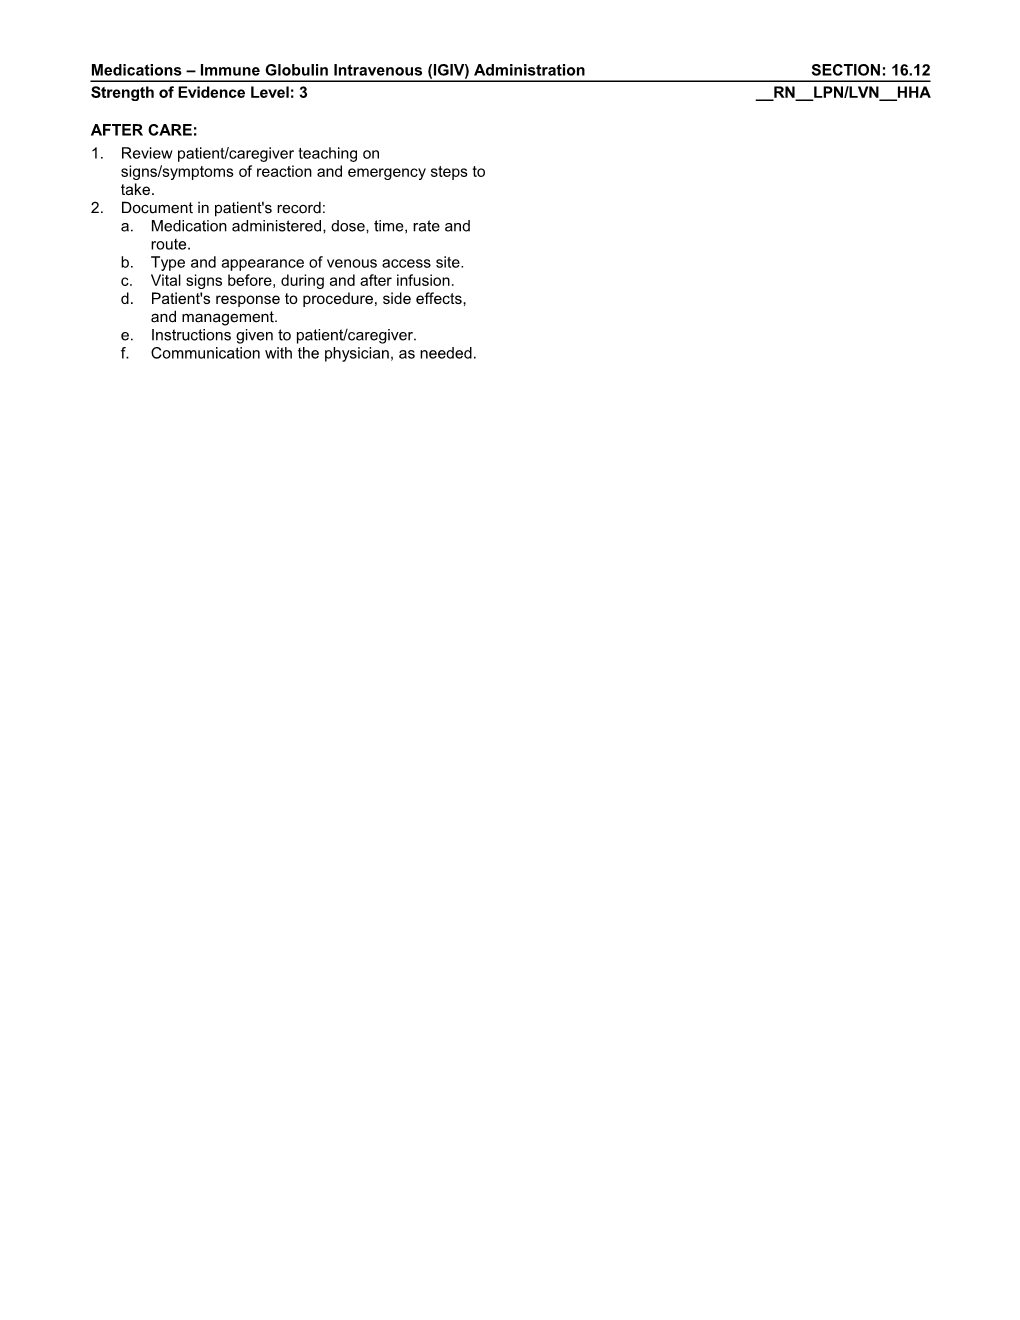 Medications Immune Globulin Intravenous (IGIV) Administrationsection: 16.12